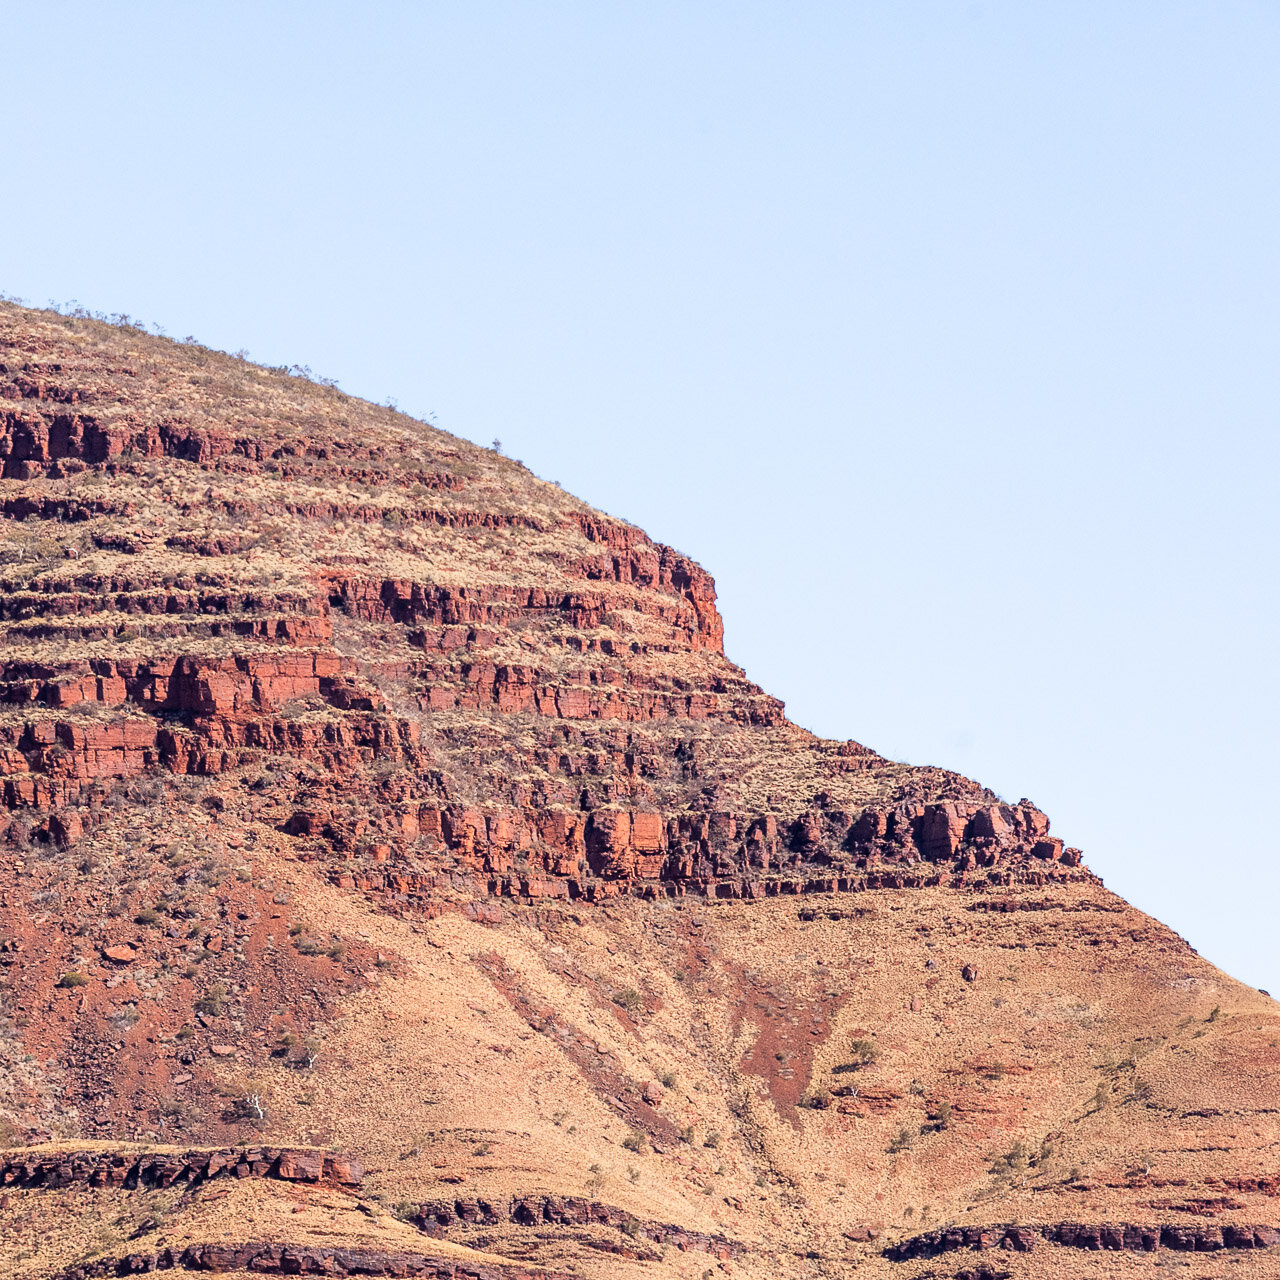 Rock formations in Karijini National Park in the Pilbara region of Western Australia